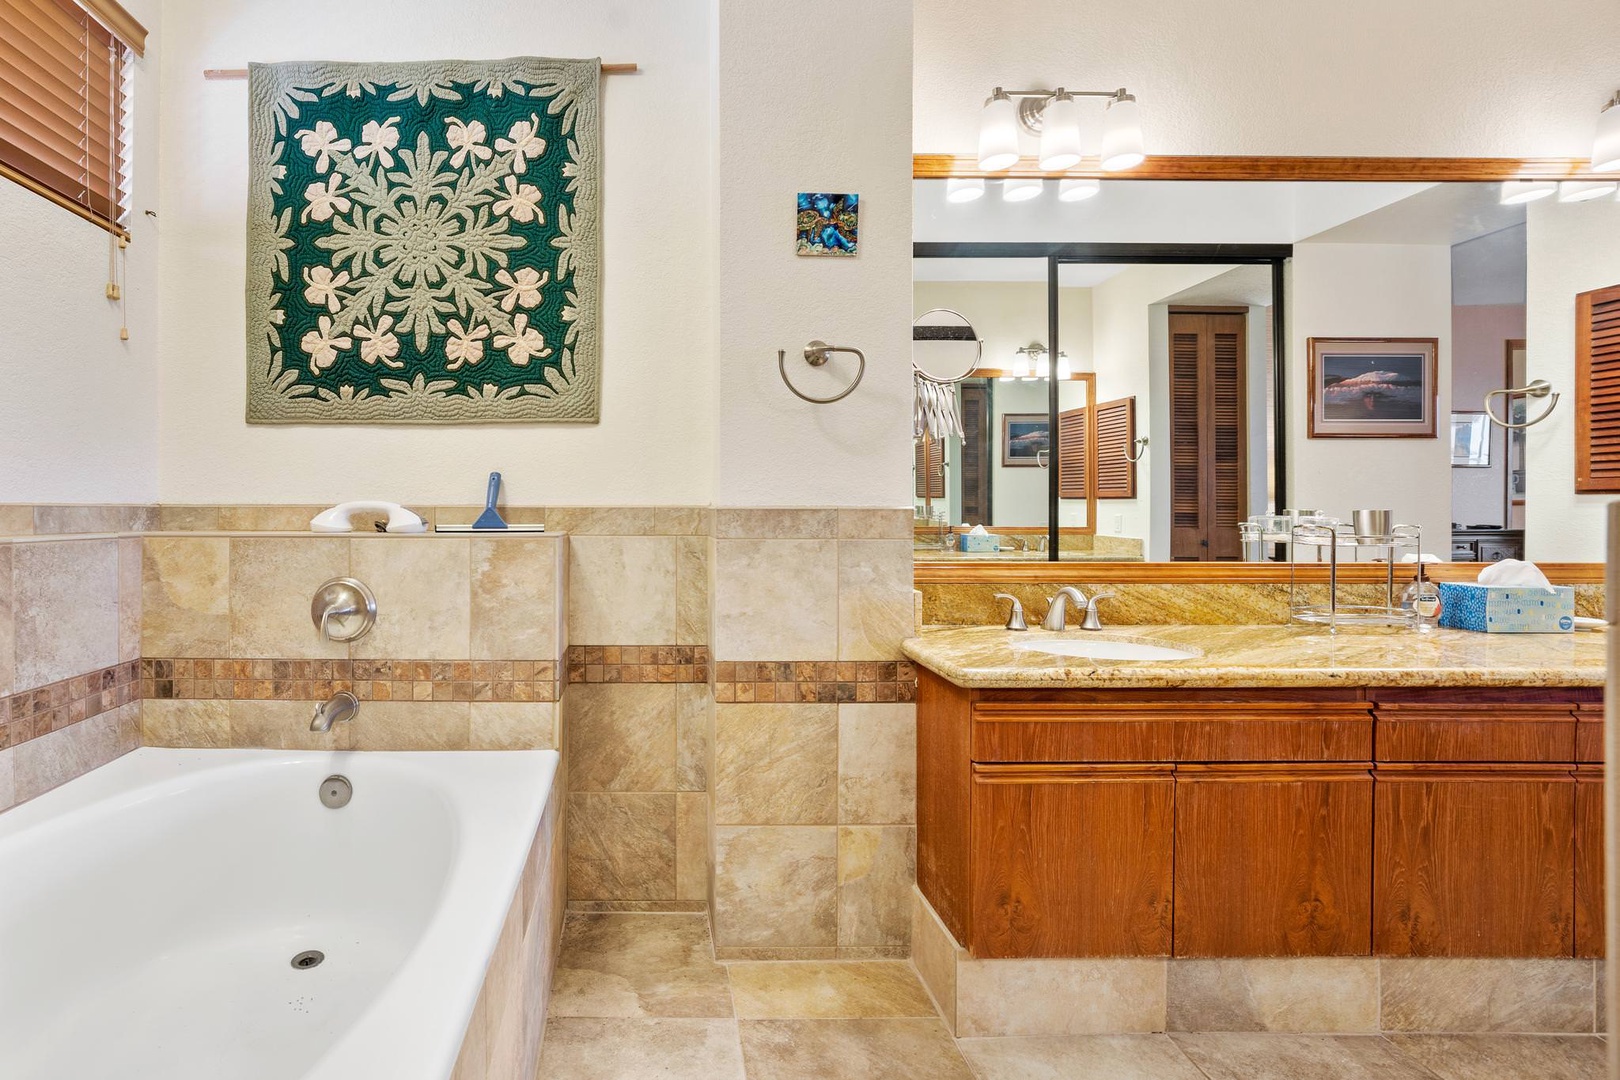 En suite bathroom with dual sinks, soaking tub, and standing shower